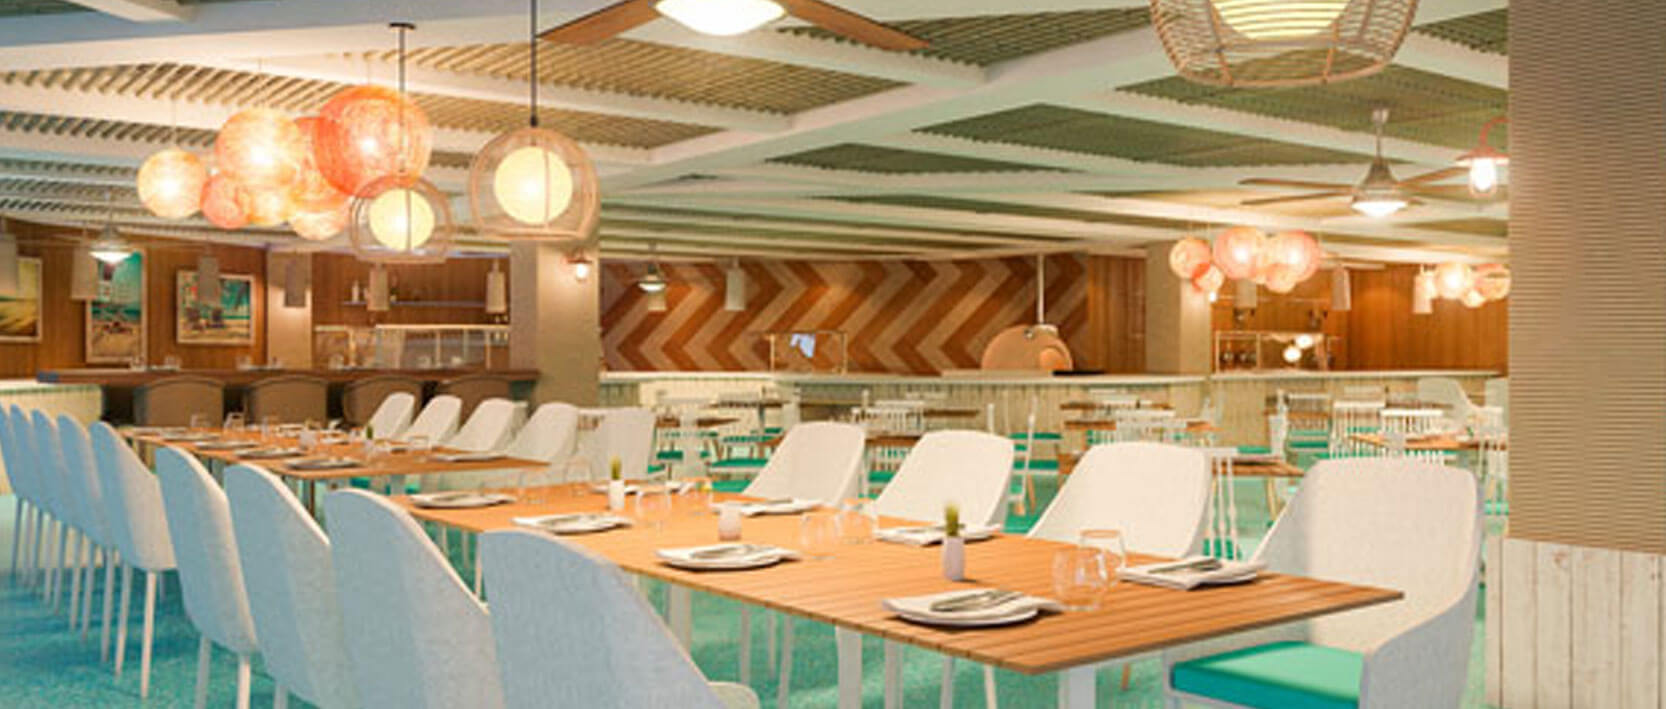 Gran Caribe Cancun Restaurants and Bars - Deck 74